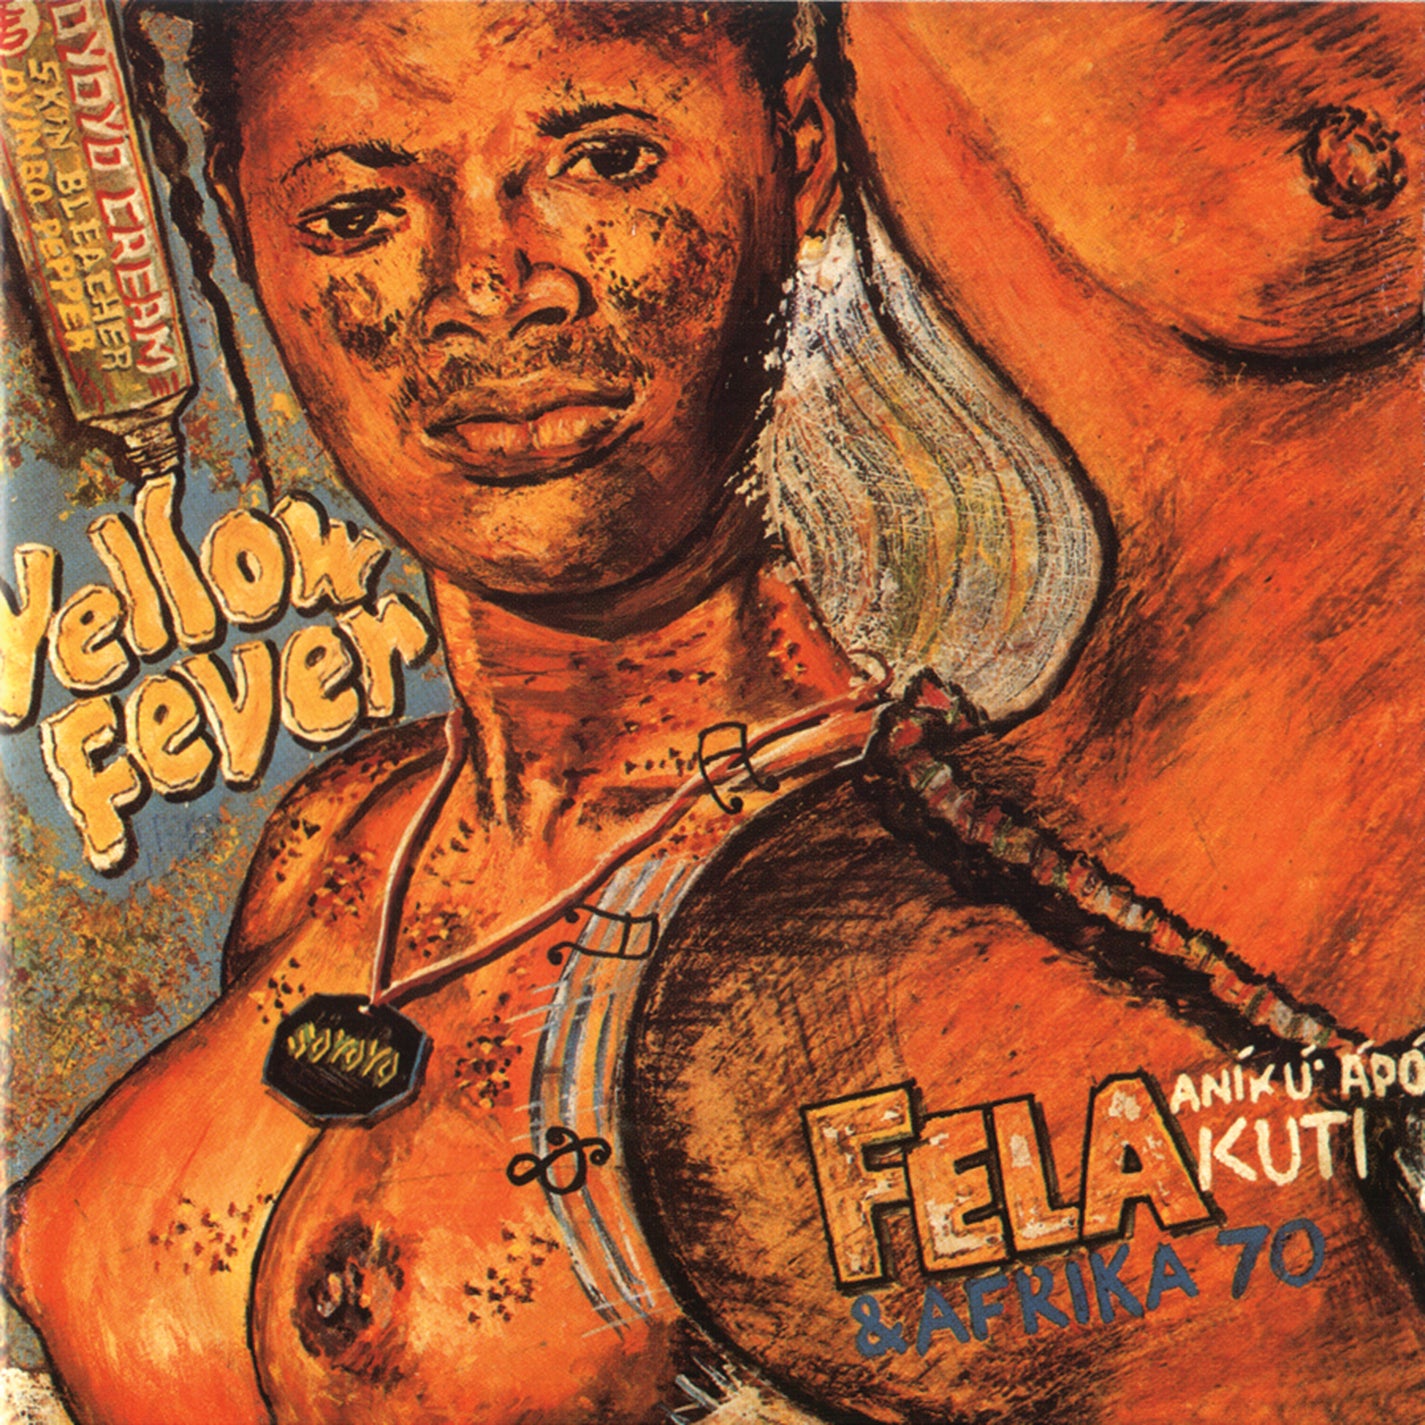 Fela Anikulapo Kuti & Afrika 70 - Yellow Fever